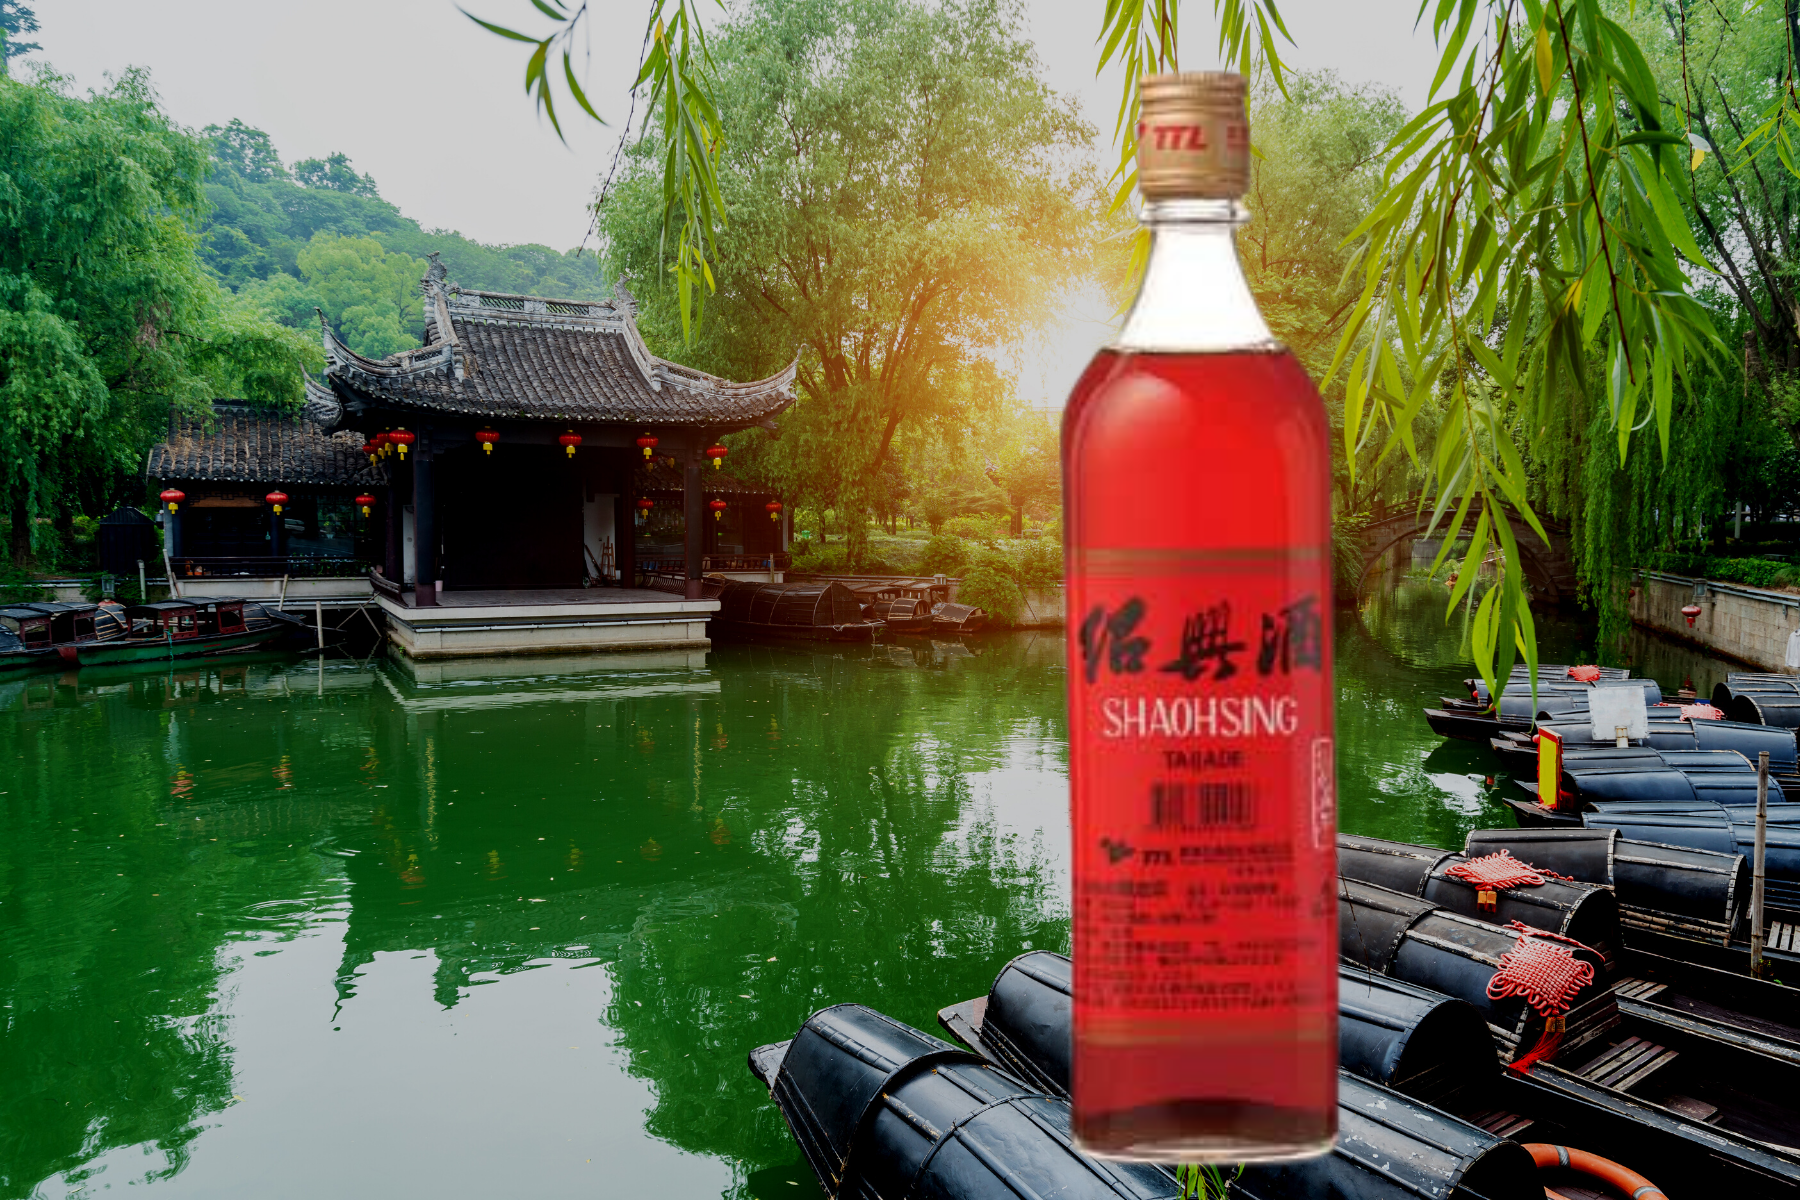 アルコール度数1014%台湾八角瓶紹興酒。本物保証